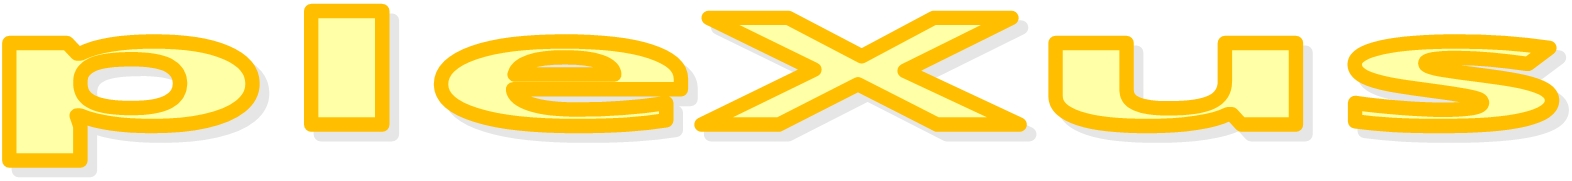 Logo pleXus